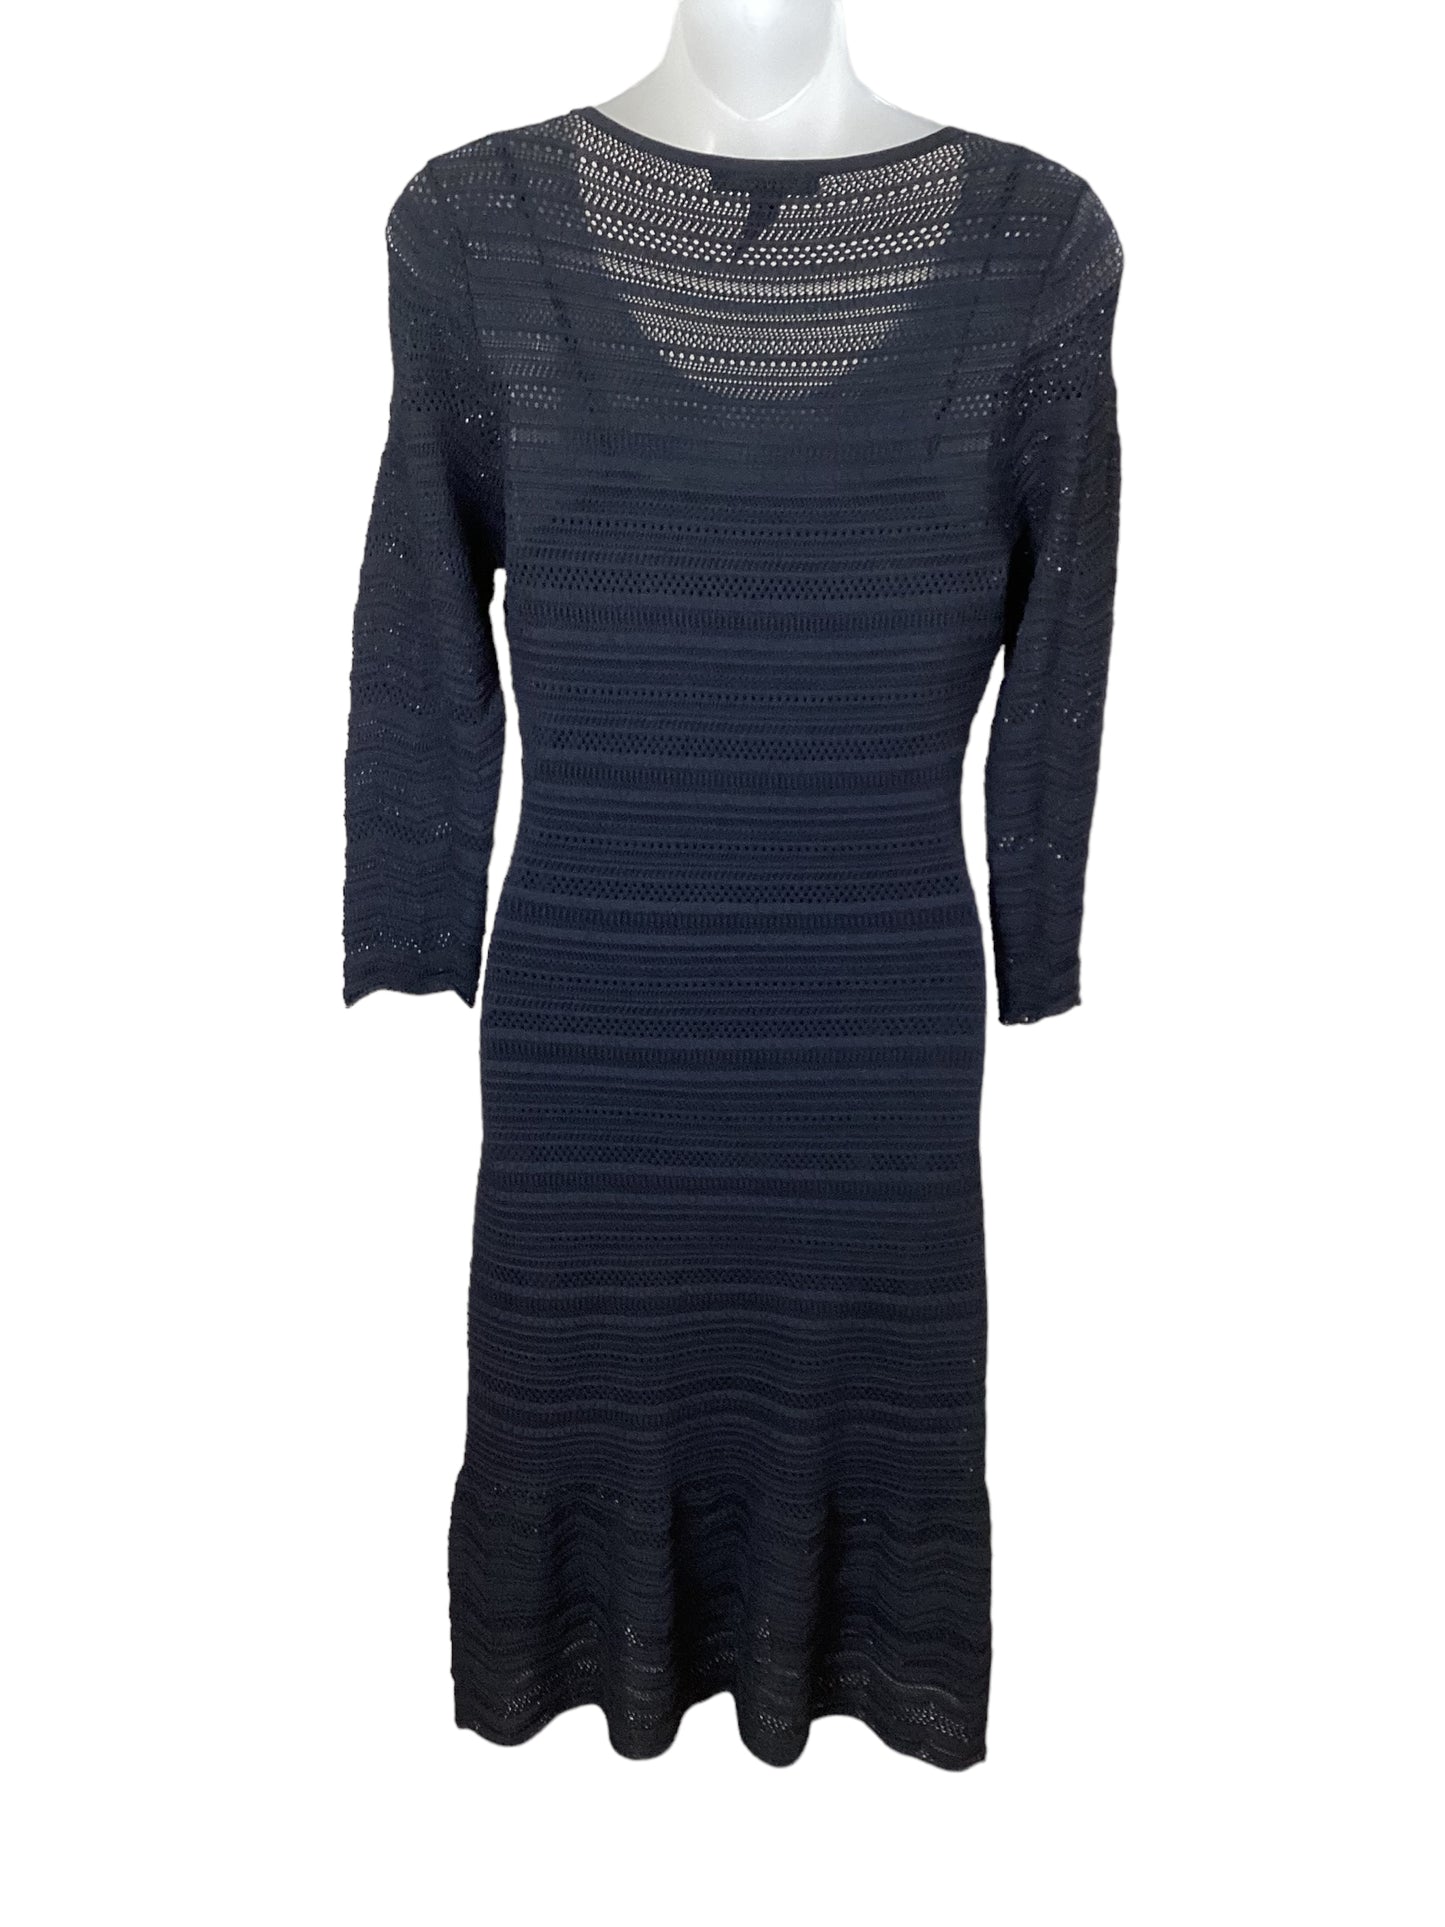 Dress Casual Maxi By Lauren By Ralph Lauren  Size: S